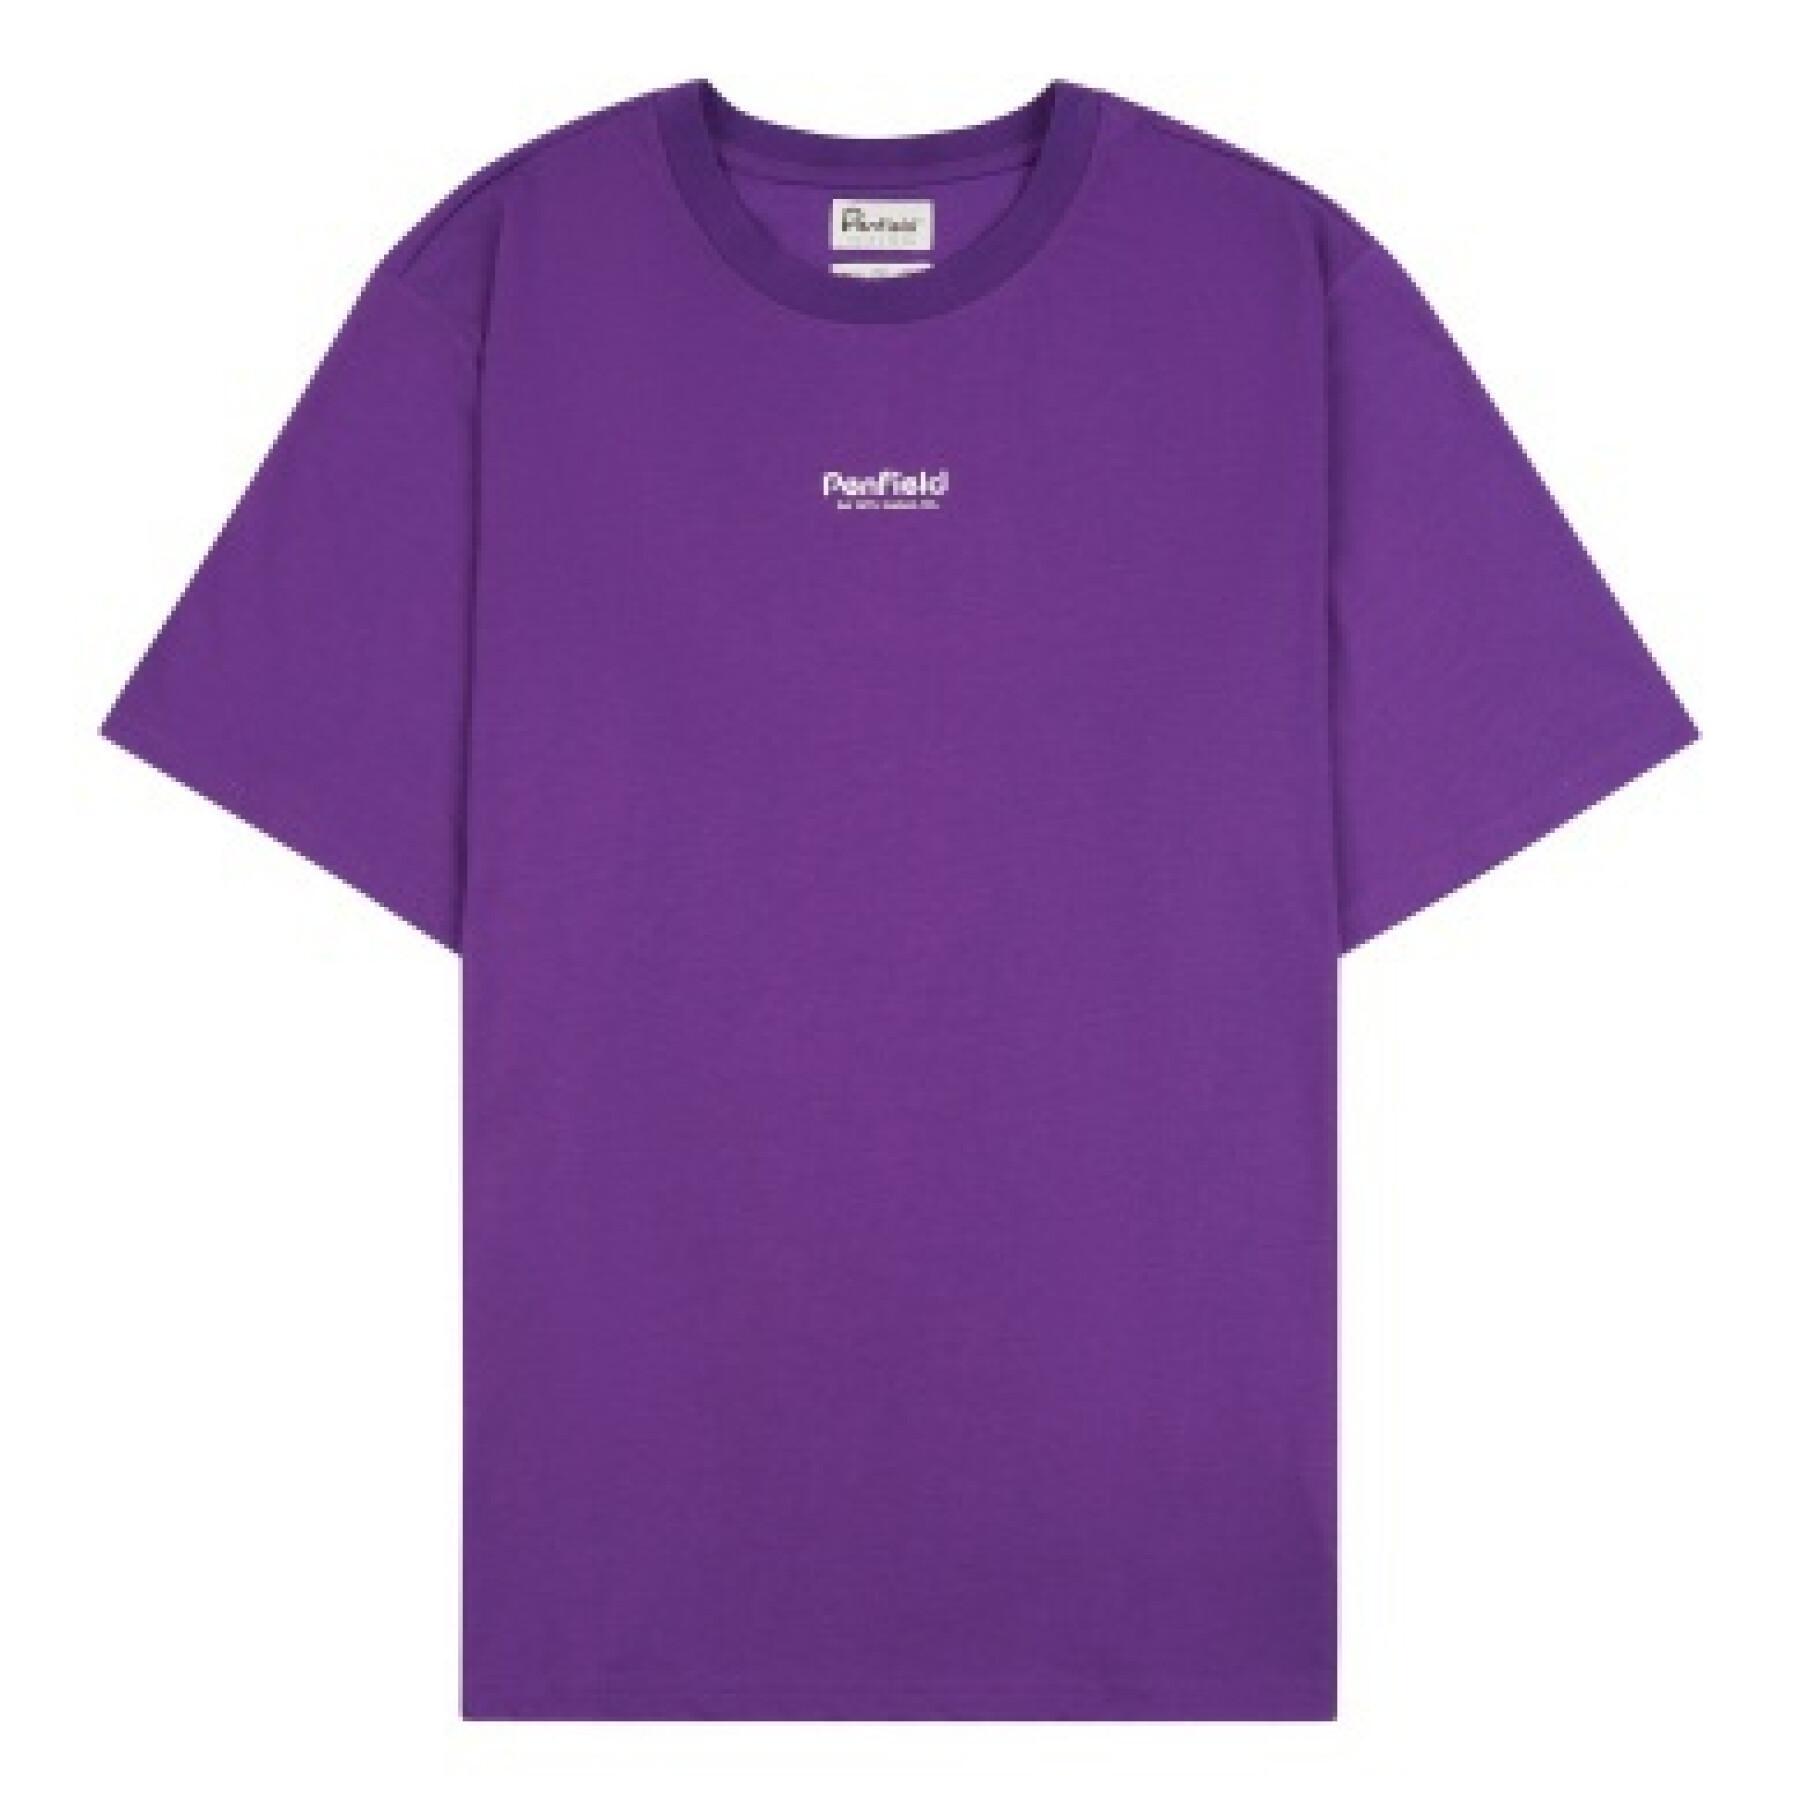 Damski T-shirt oversize Penfield montain graphic